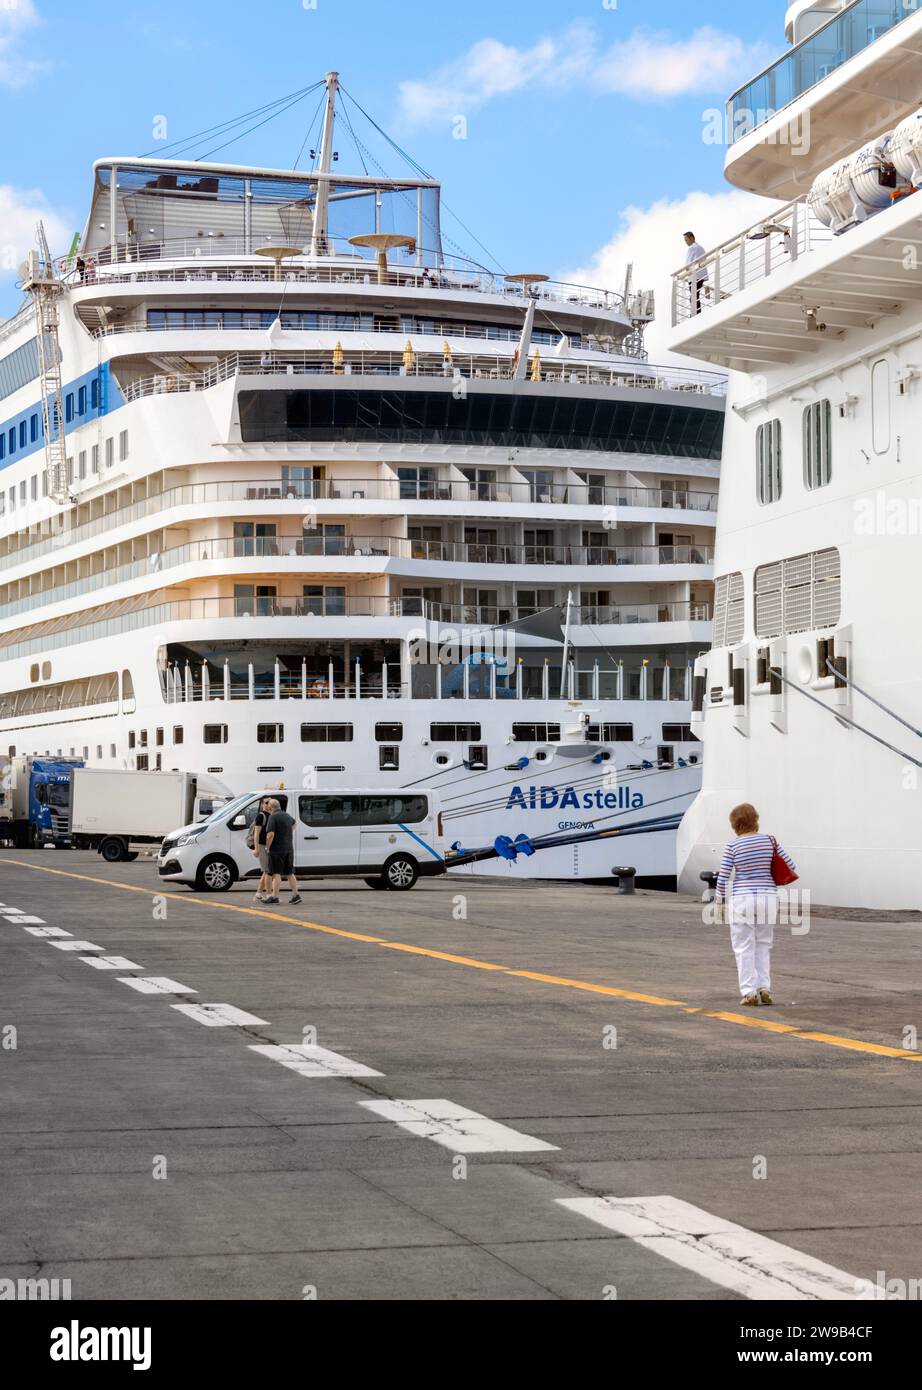 Aida Stella cruise ship docked at Muelle Sur, Santa Cruz de Tenerife, Canary Islands, Spain Stock Photo